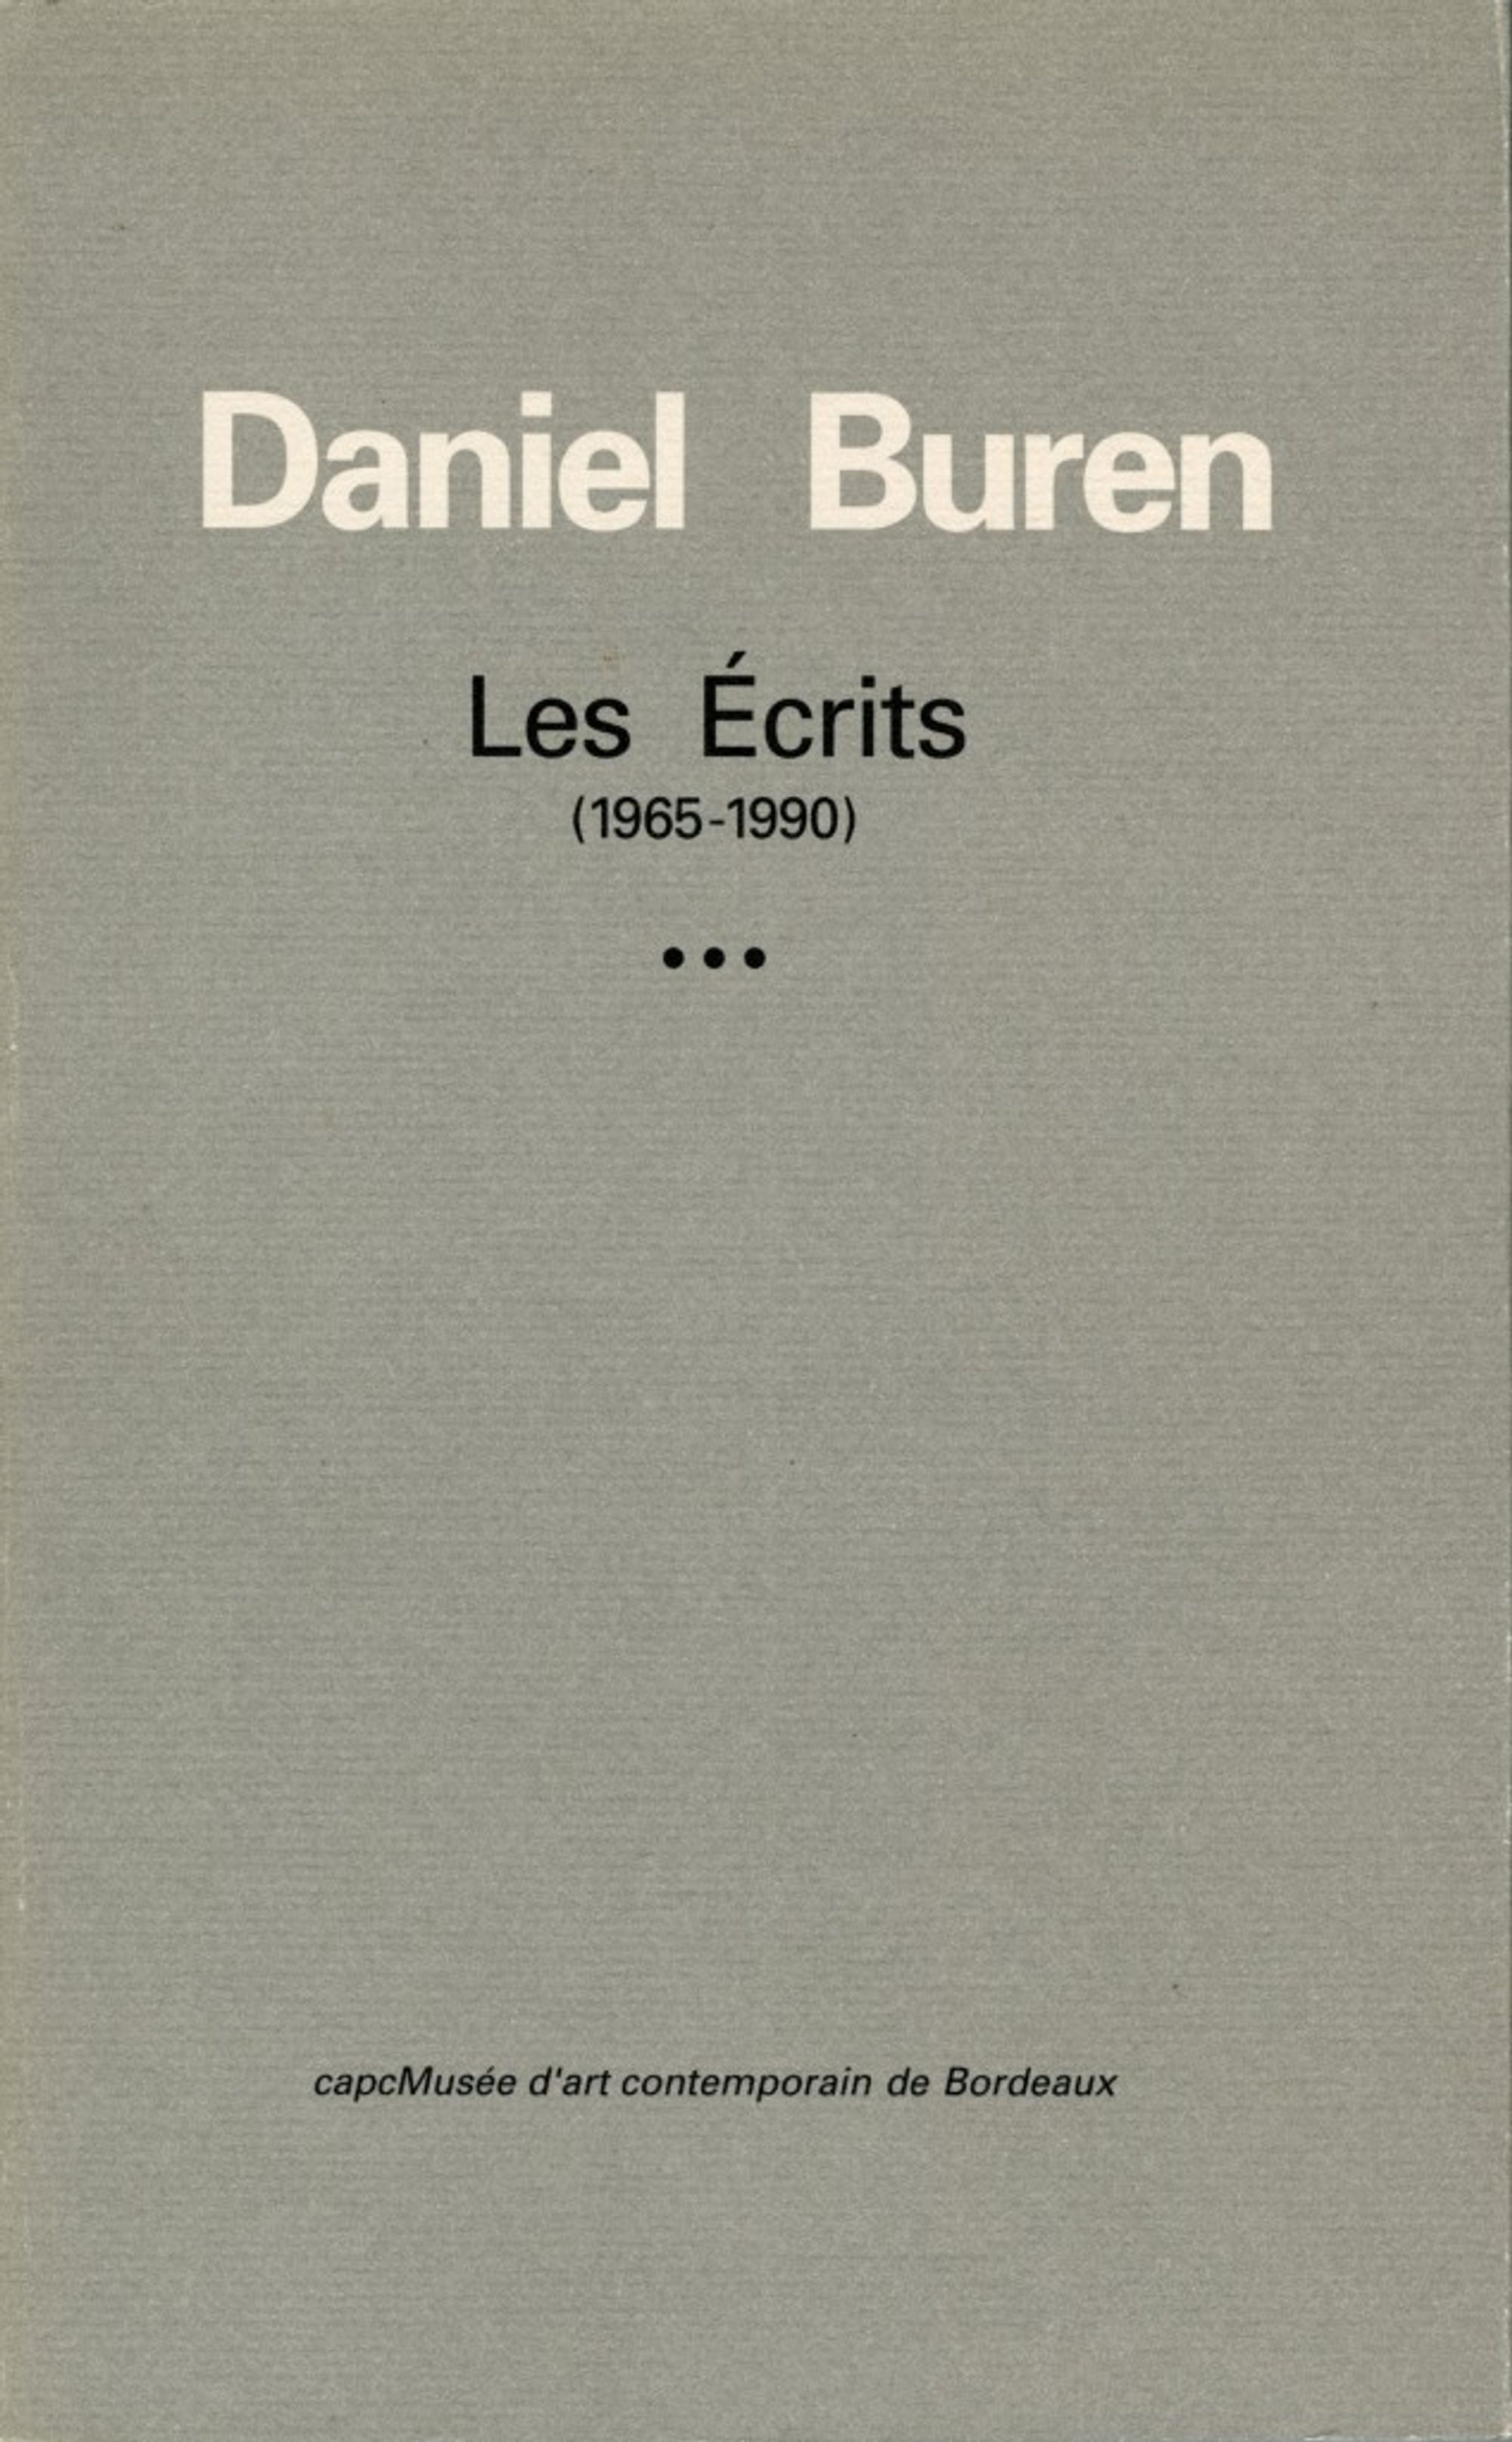 Detail view of Les Ecrits (1965-1990) against a plain gray background